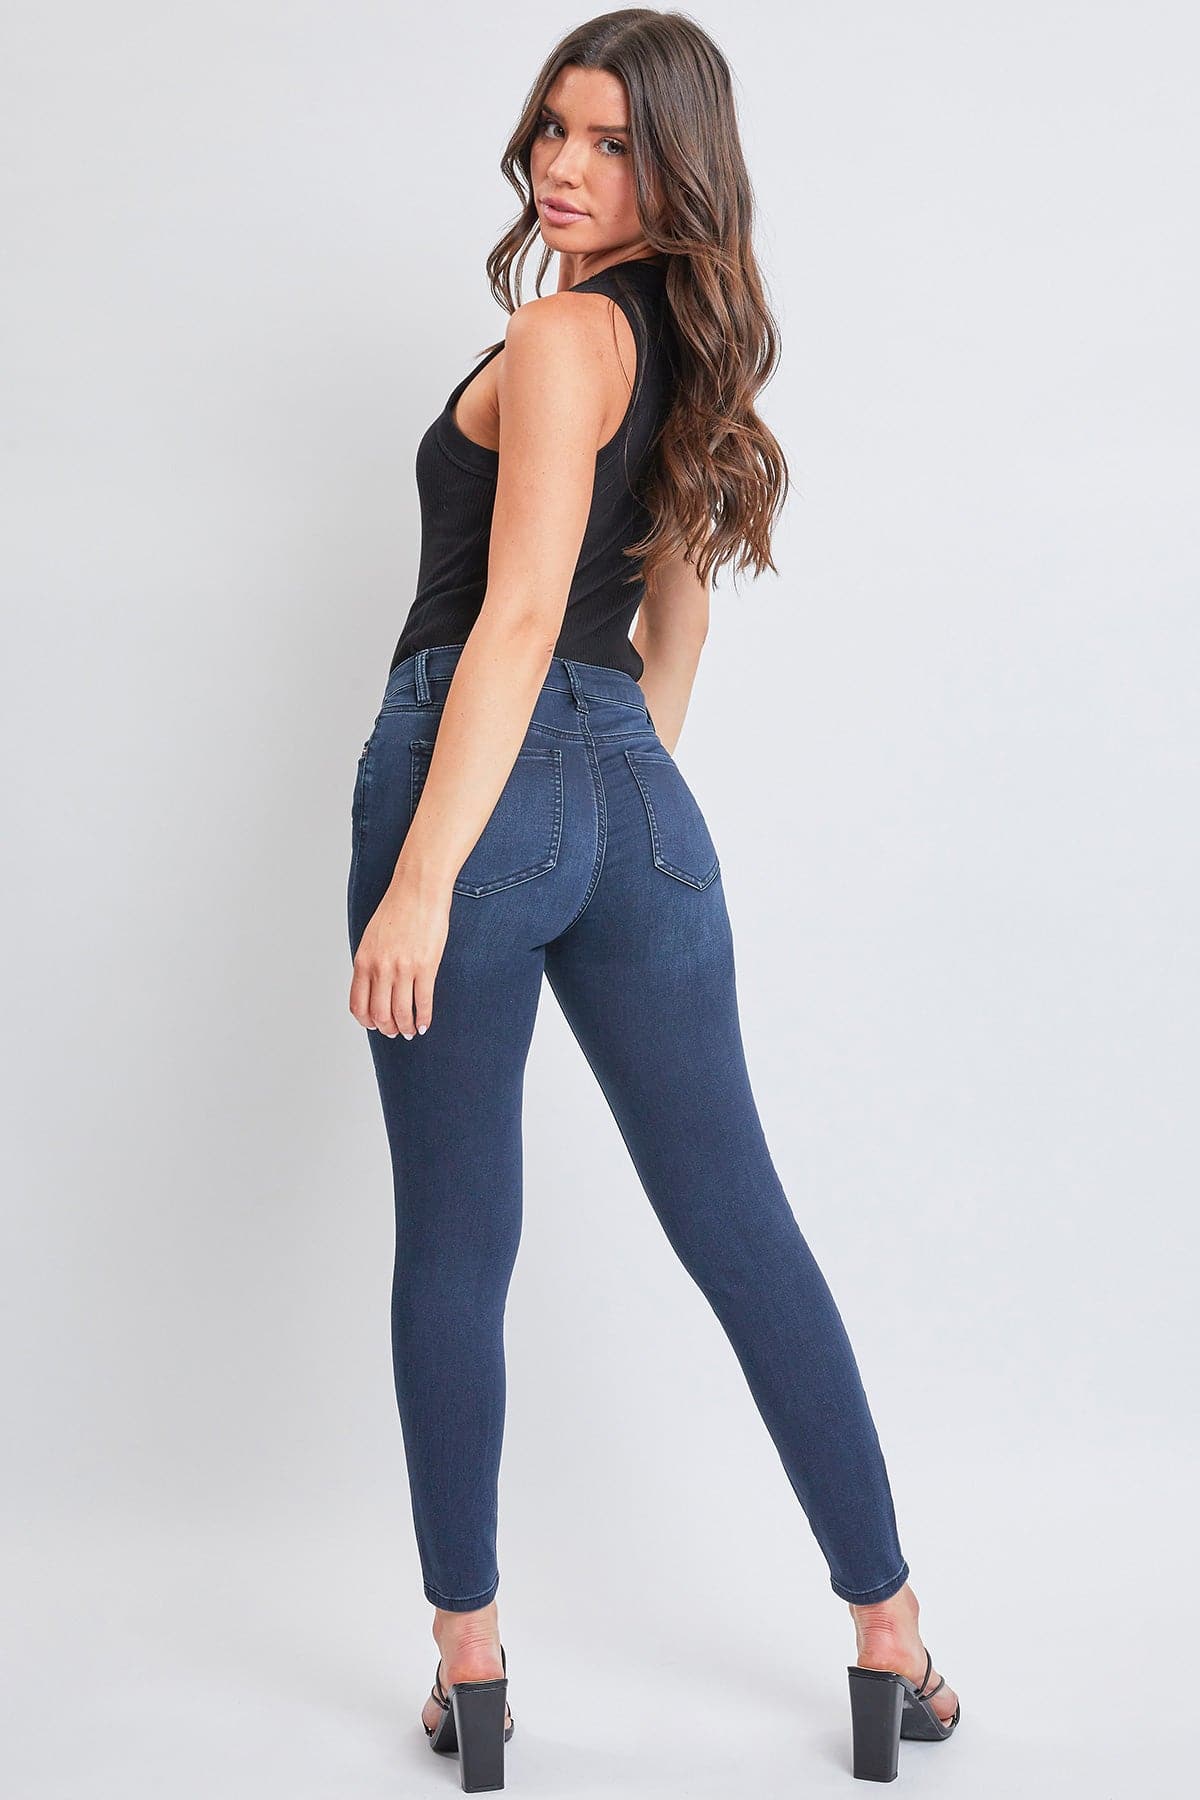 Women's Essential HyperDenim Super Stretchy Jeans